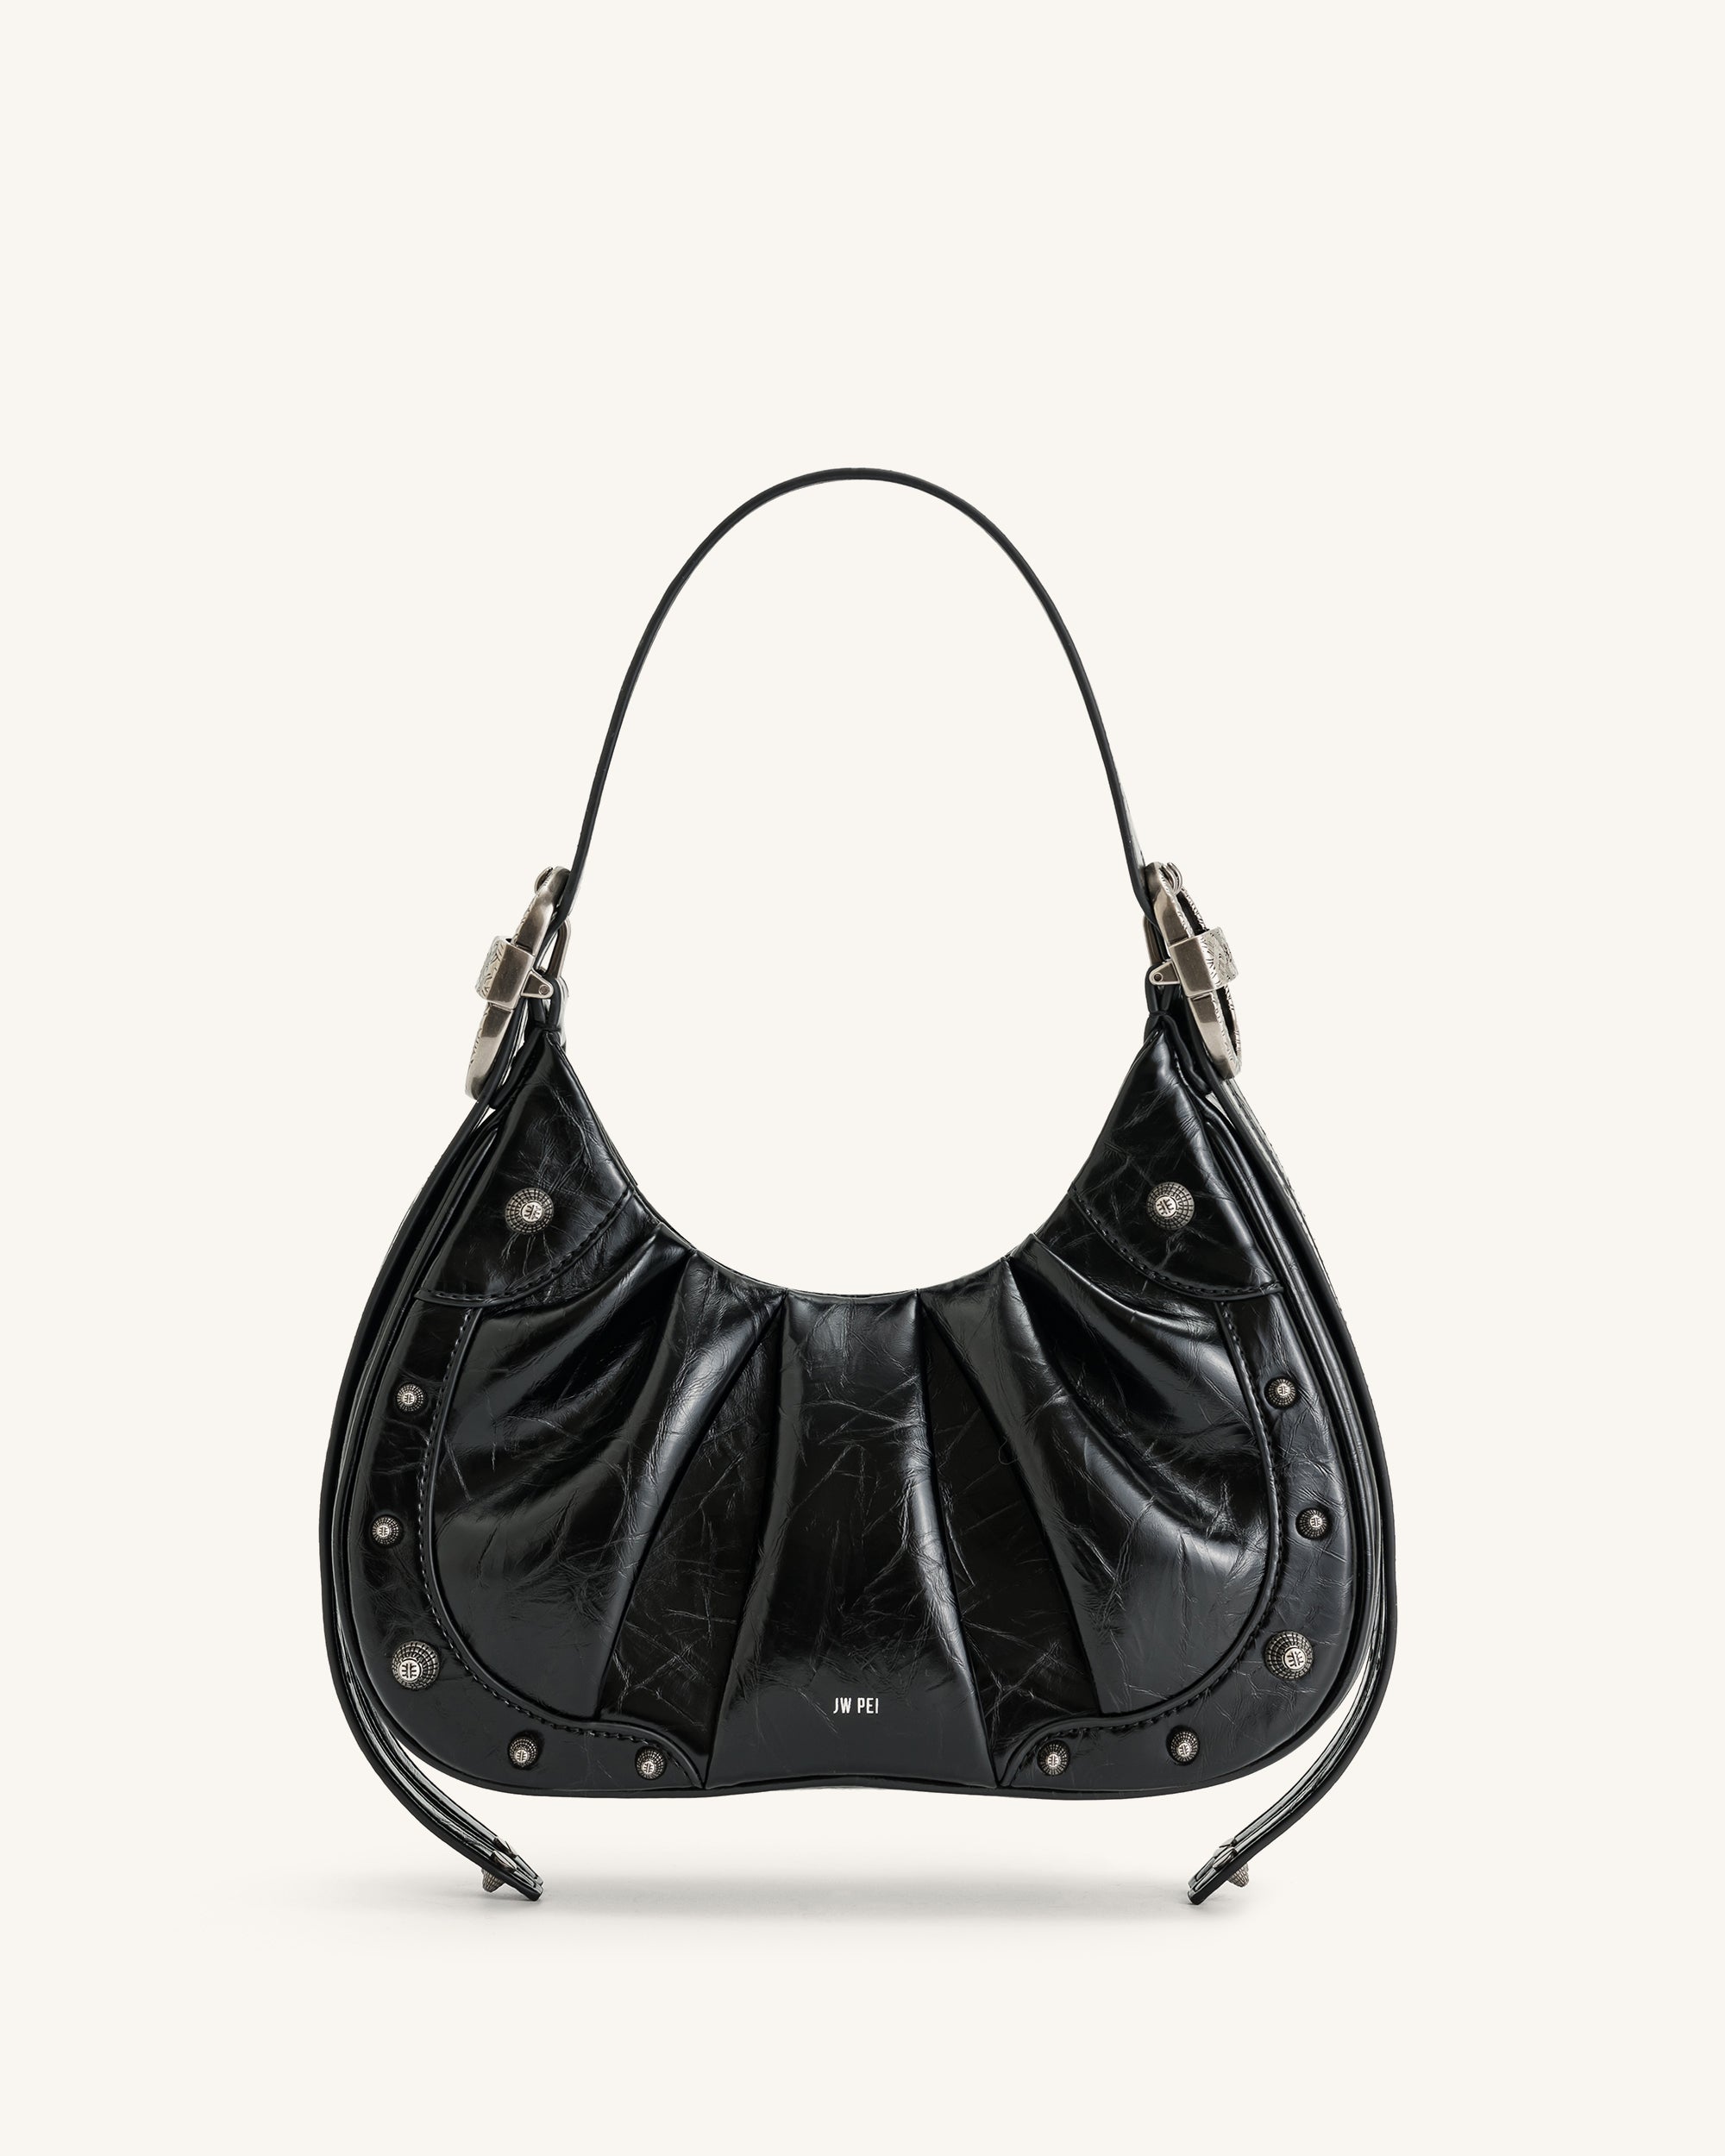 JW PEI Women's Mini Flap Crossbody,Black: Handbags